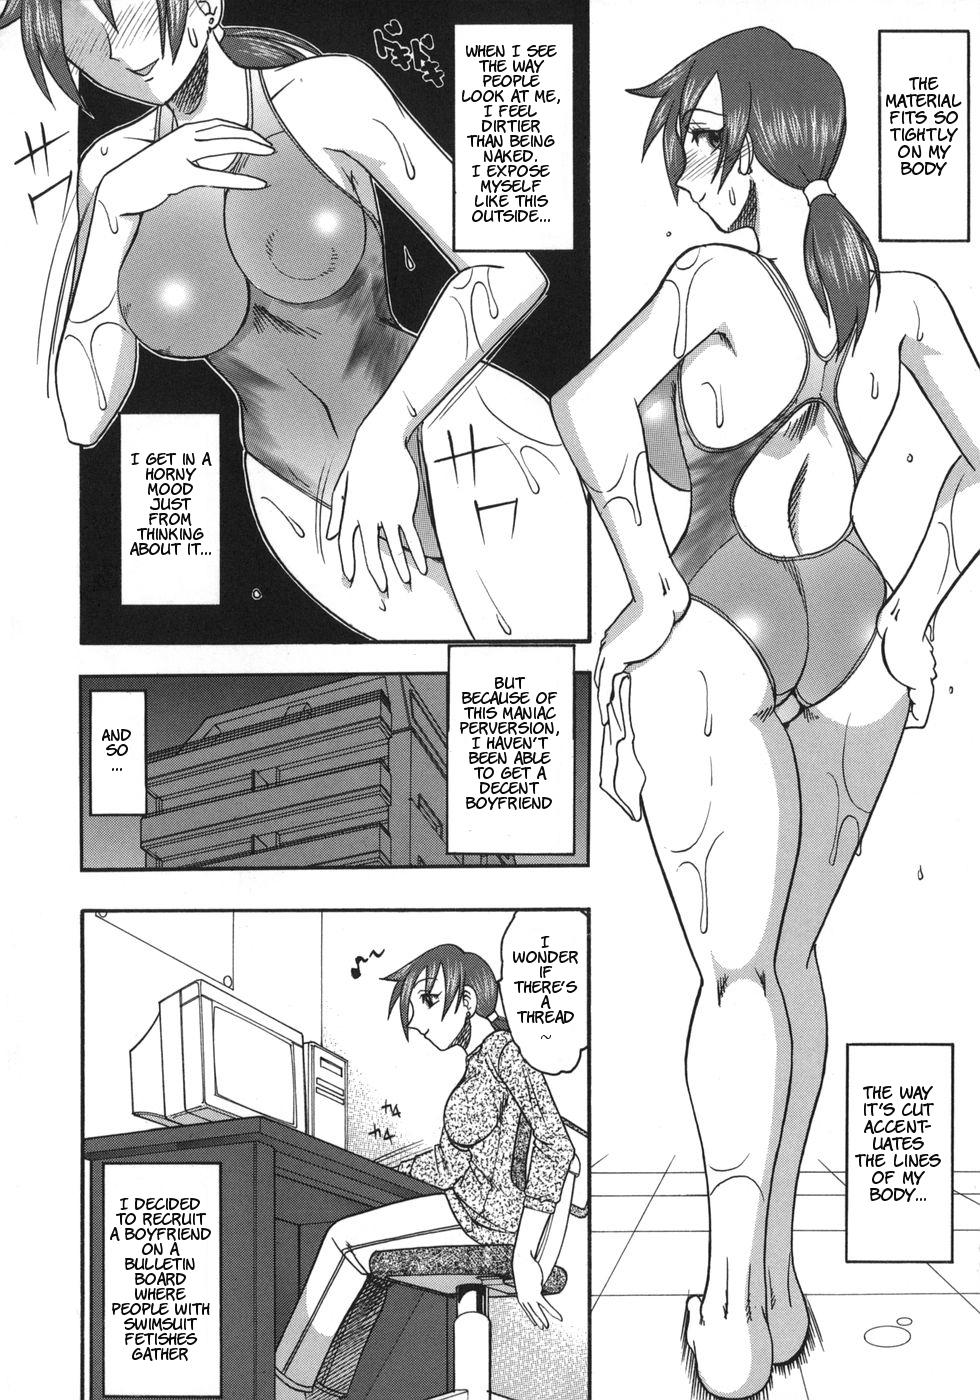 Boy Fuck Girl Hadaka Yori Hiwai - She is dirtier than nakedness Facials - Page 10